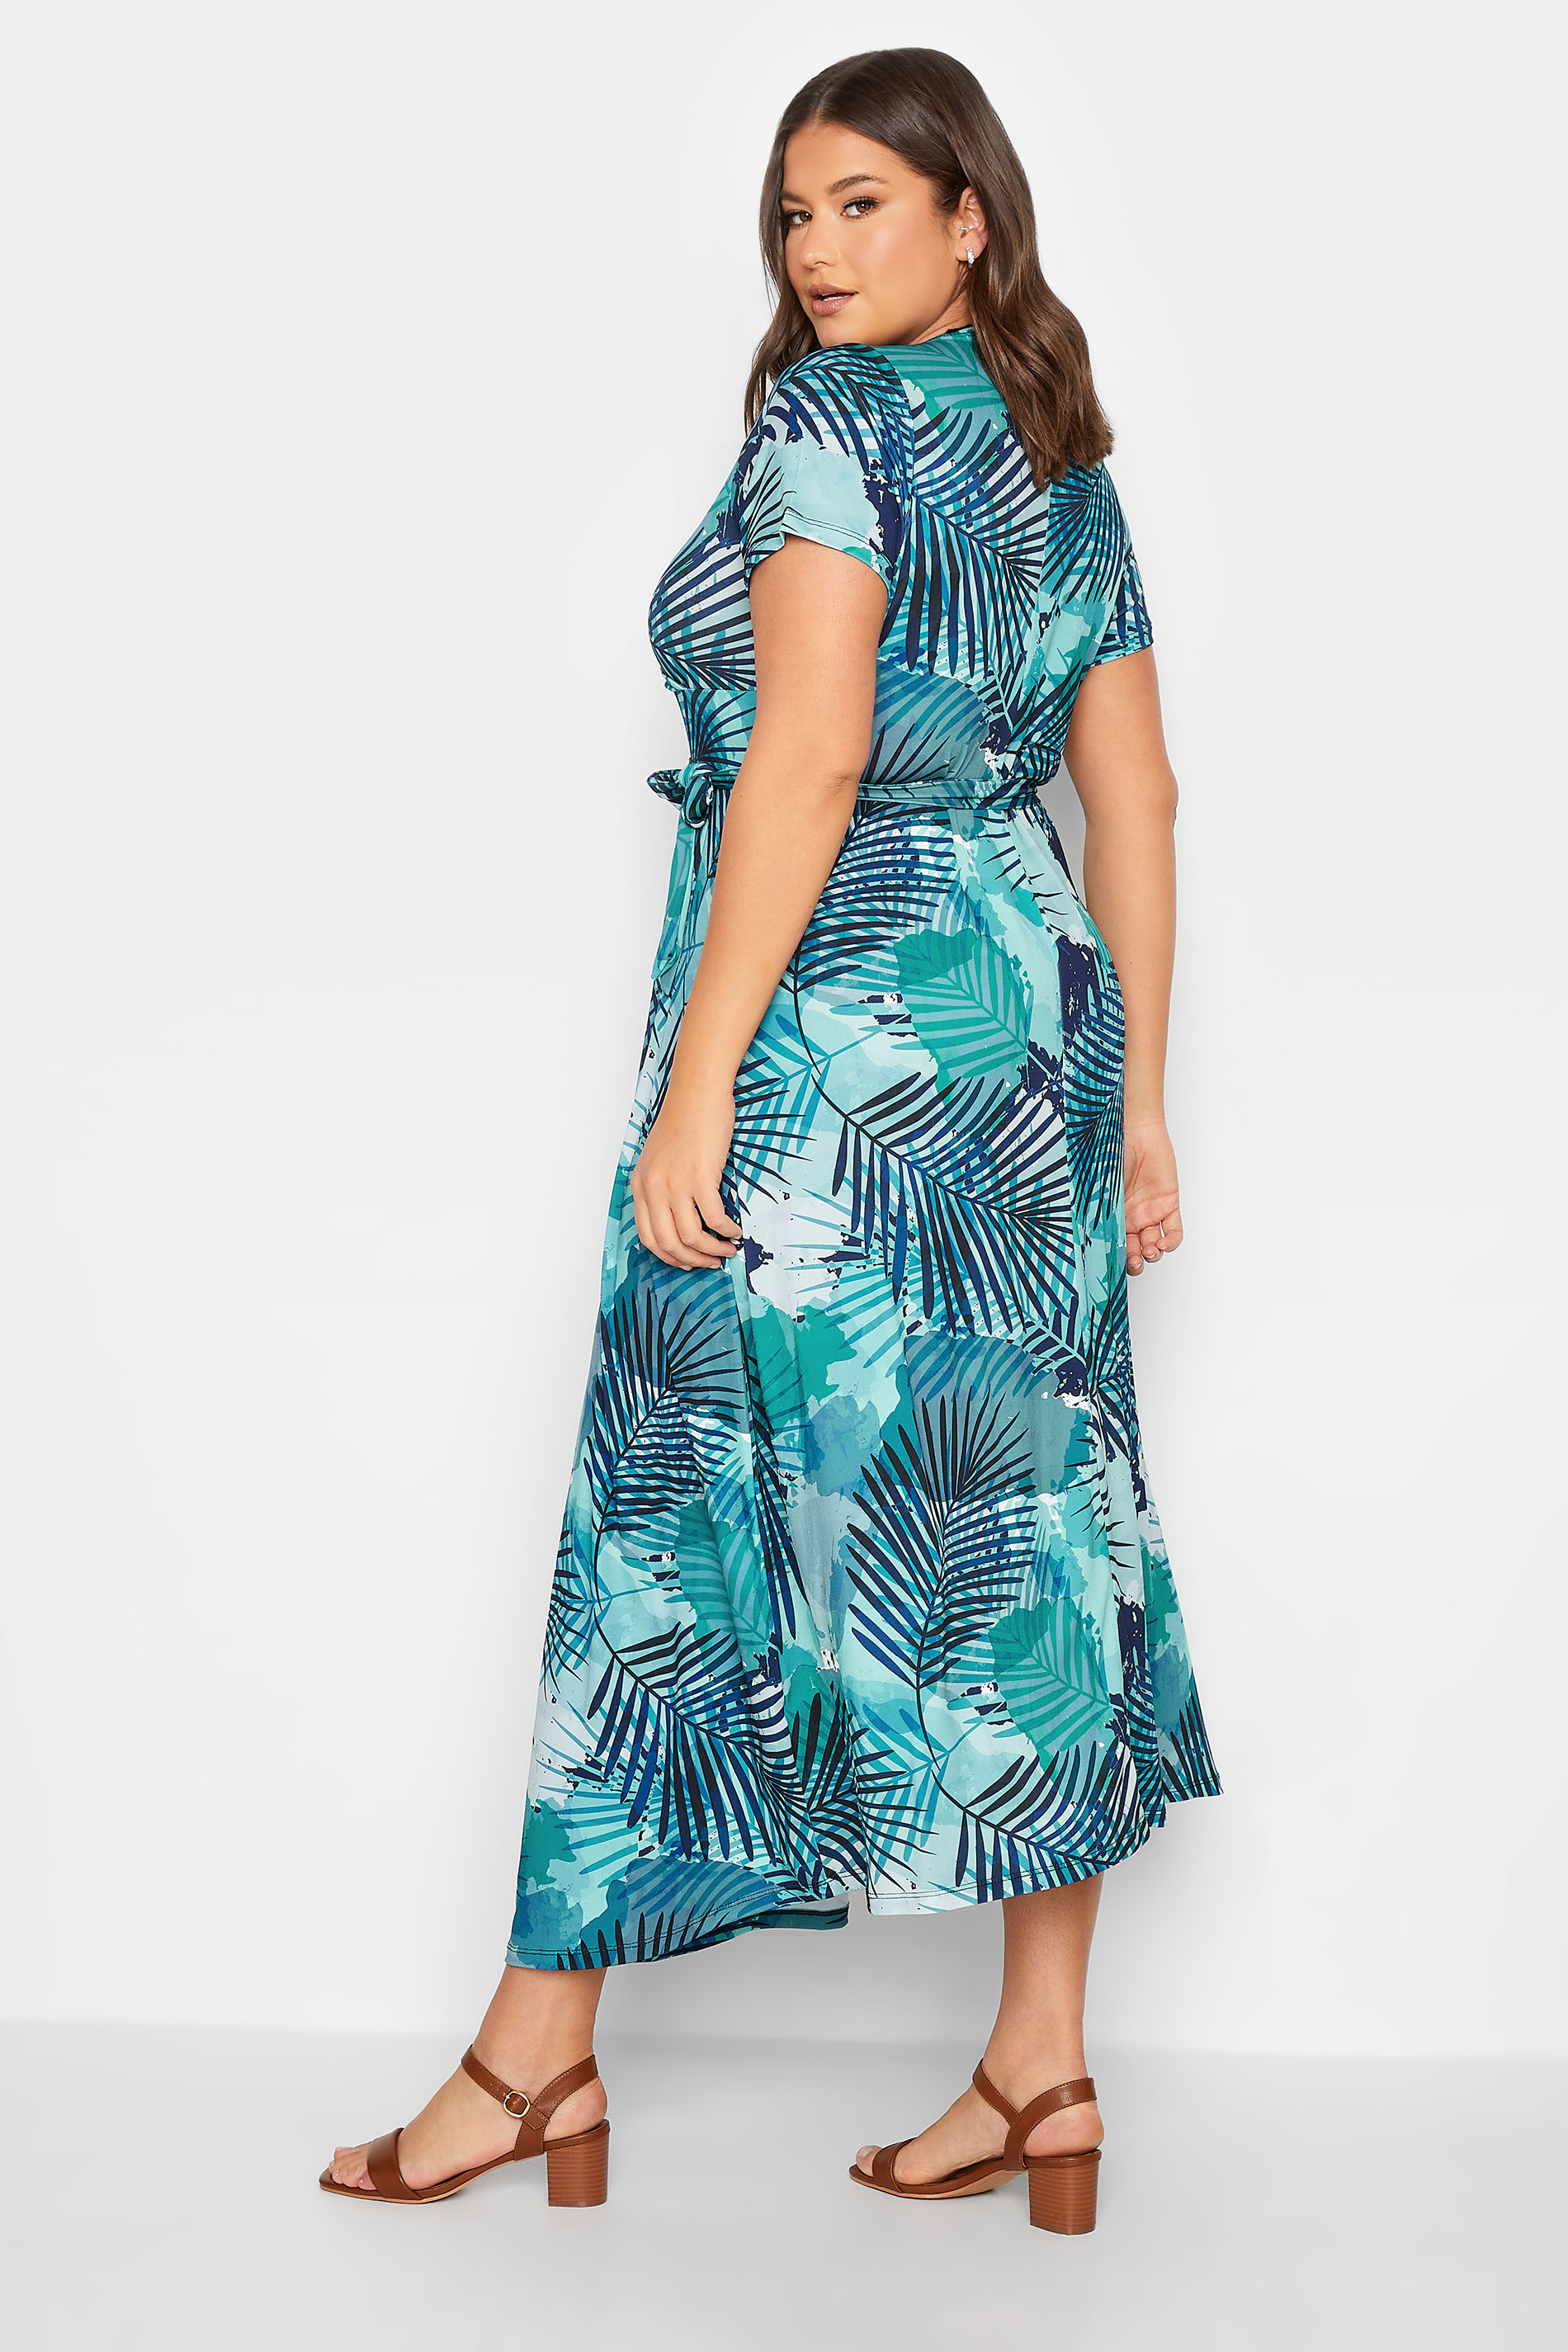 YOURS Plus Size Blue Leaf Print Wrap Maxi Dress | Yours Clothing